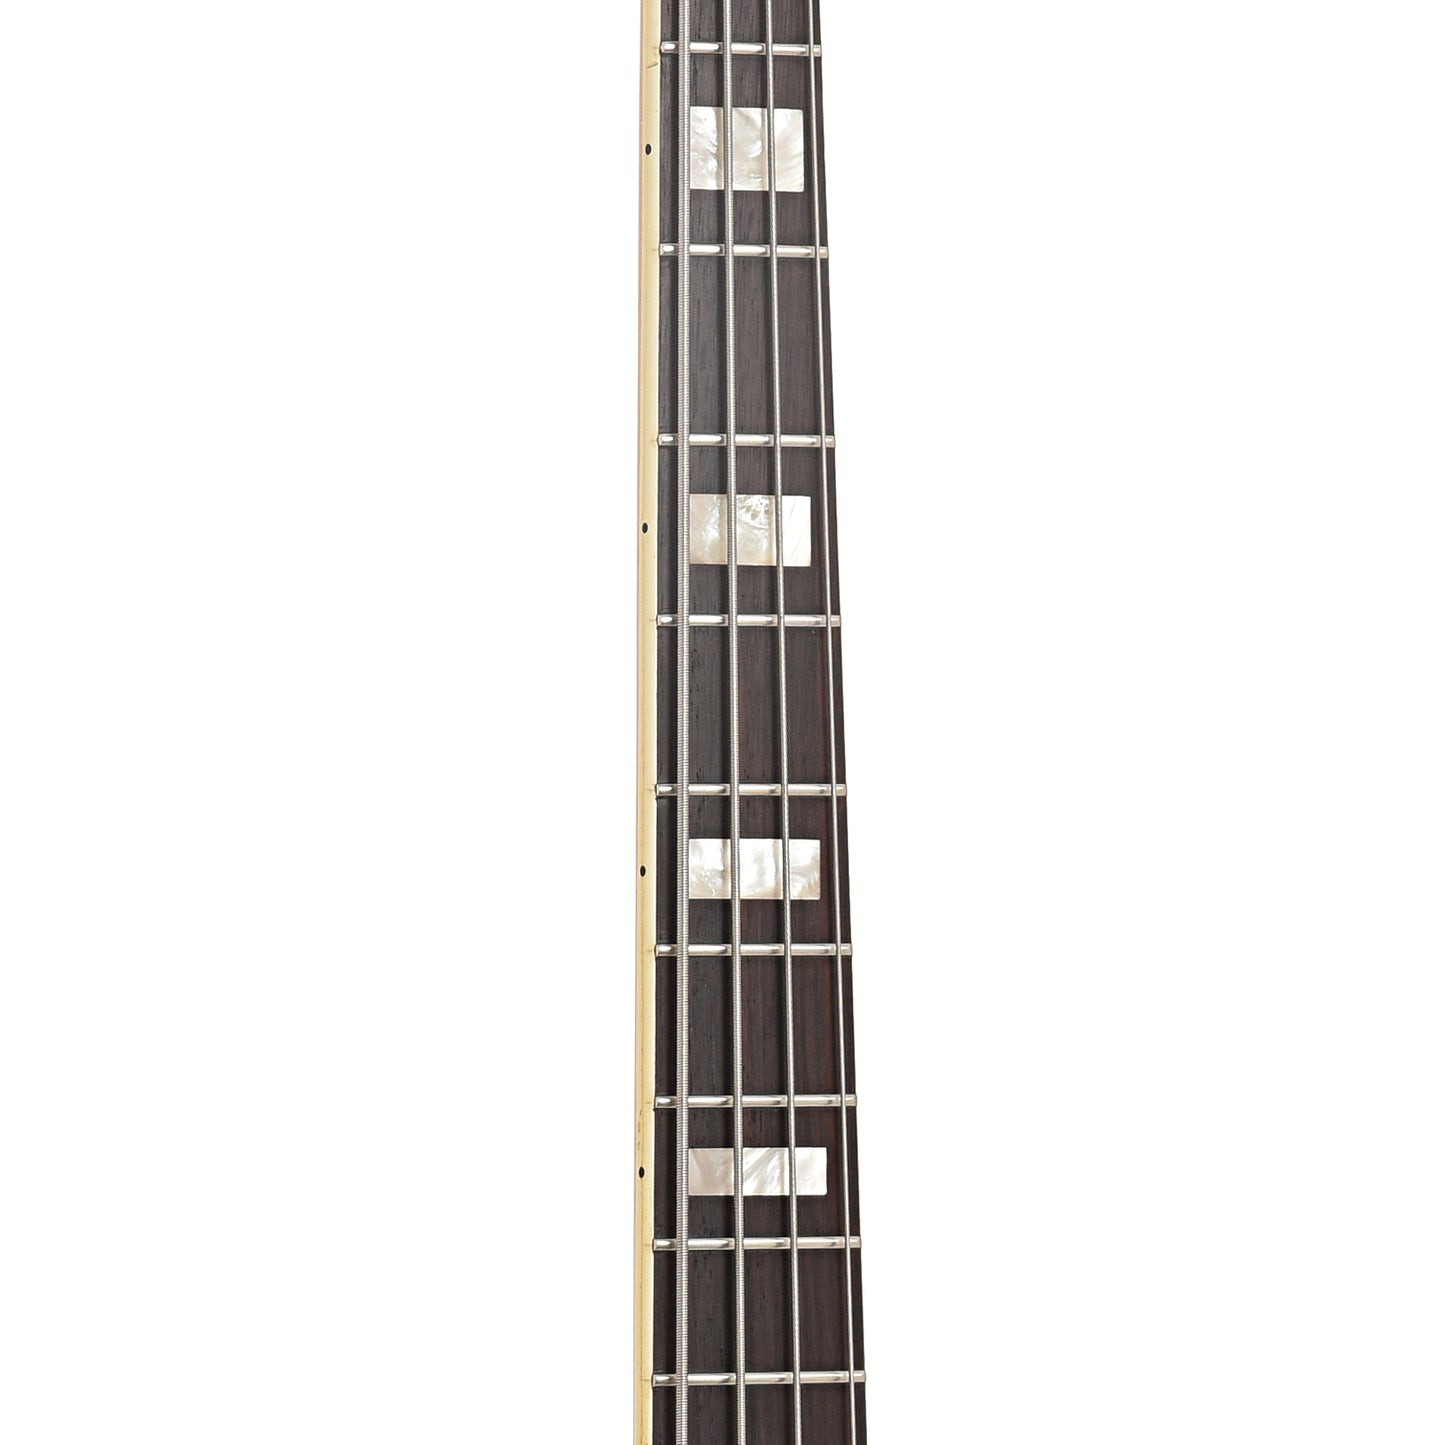 Fretboard of Fender Jazz Bass (1973)